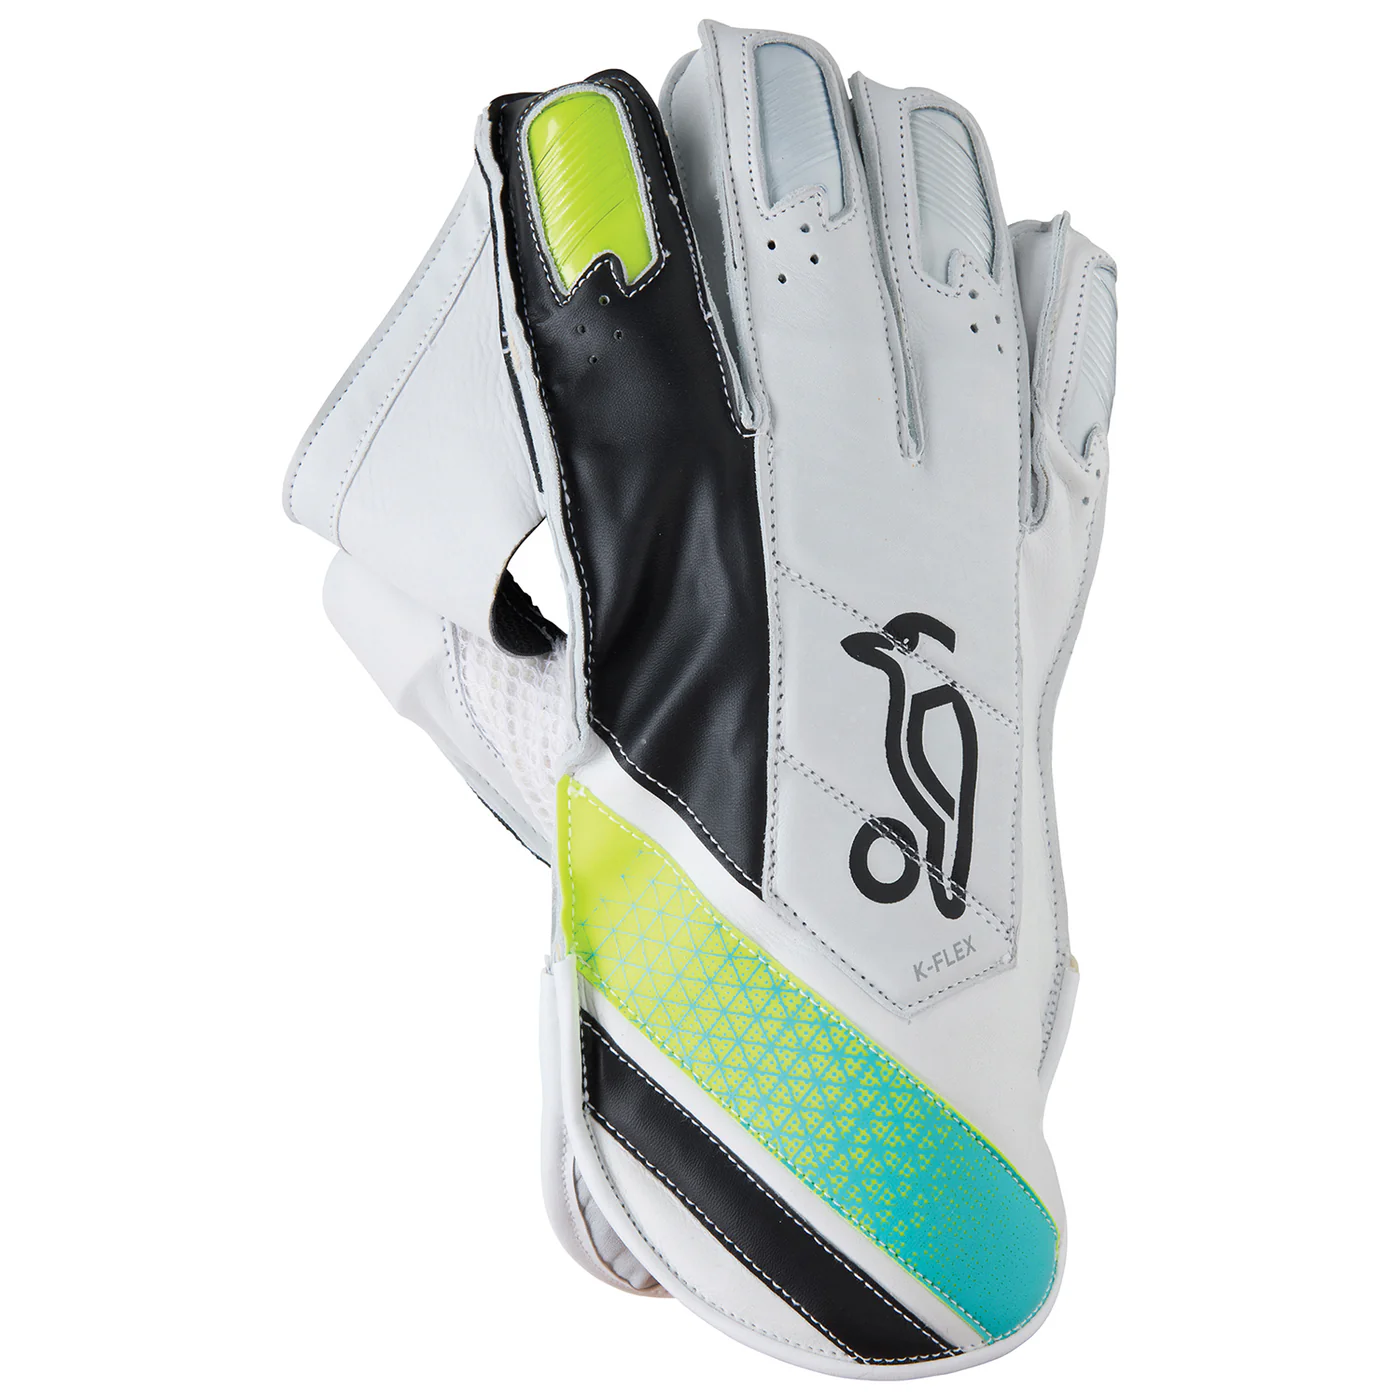 Kookaburra Rapid Pro Wicketkeeping Gloves 3J11261